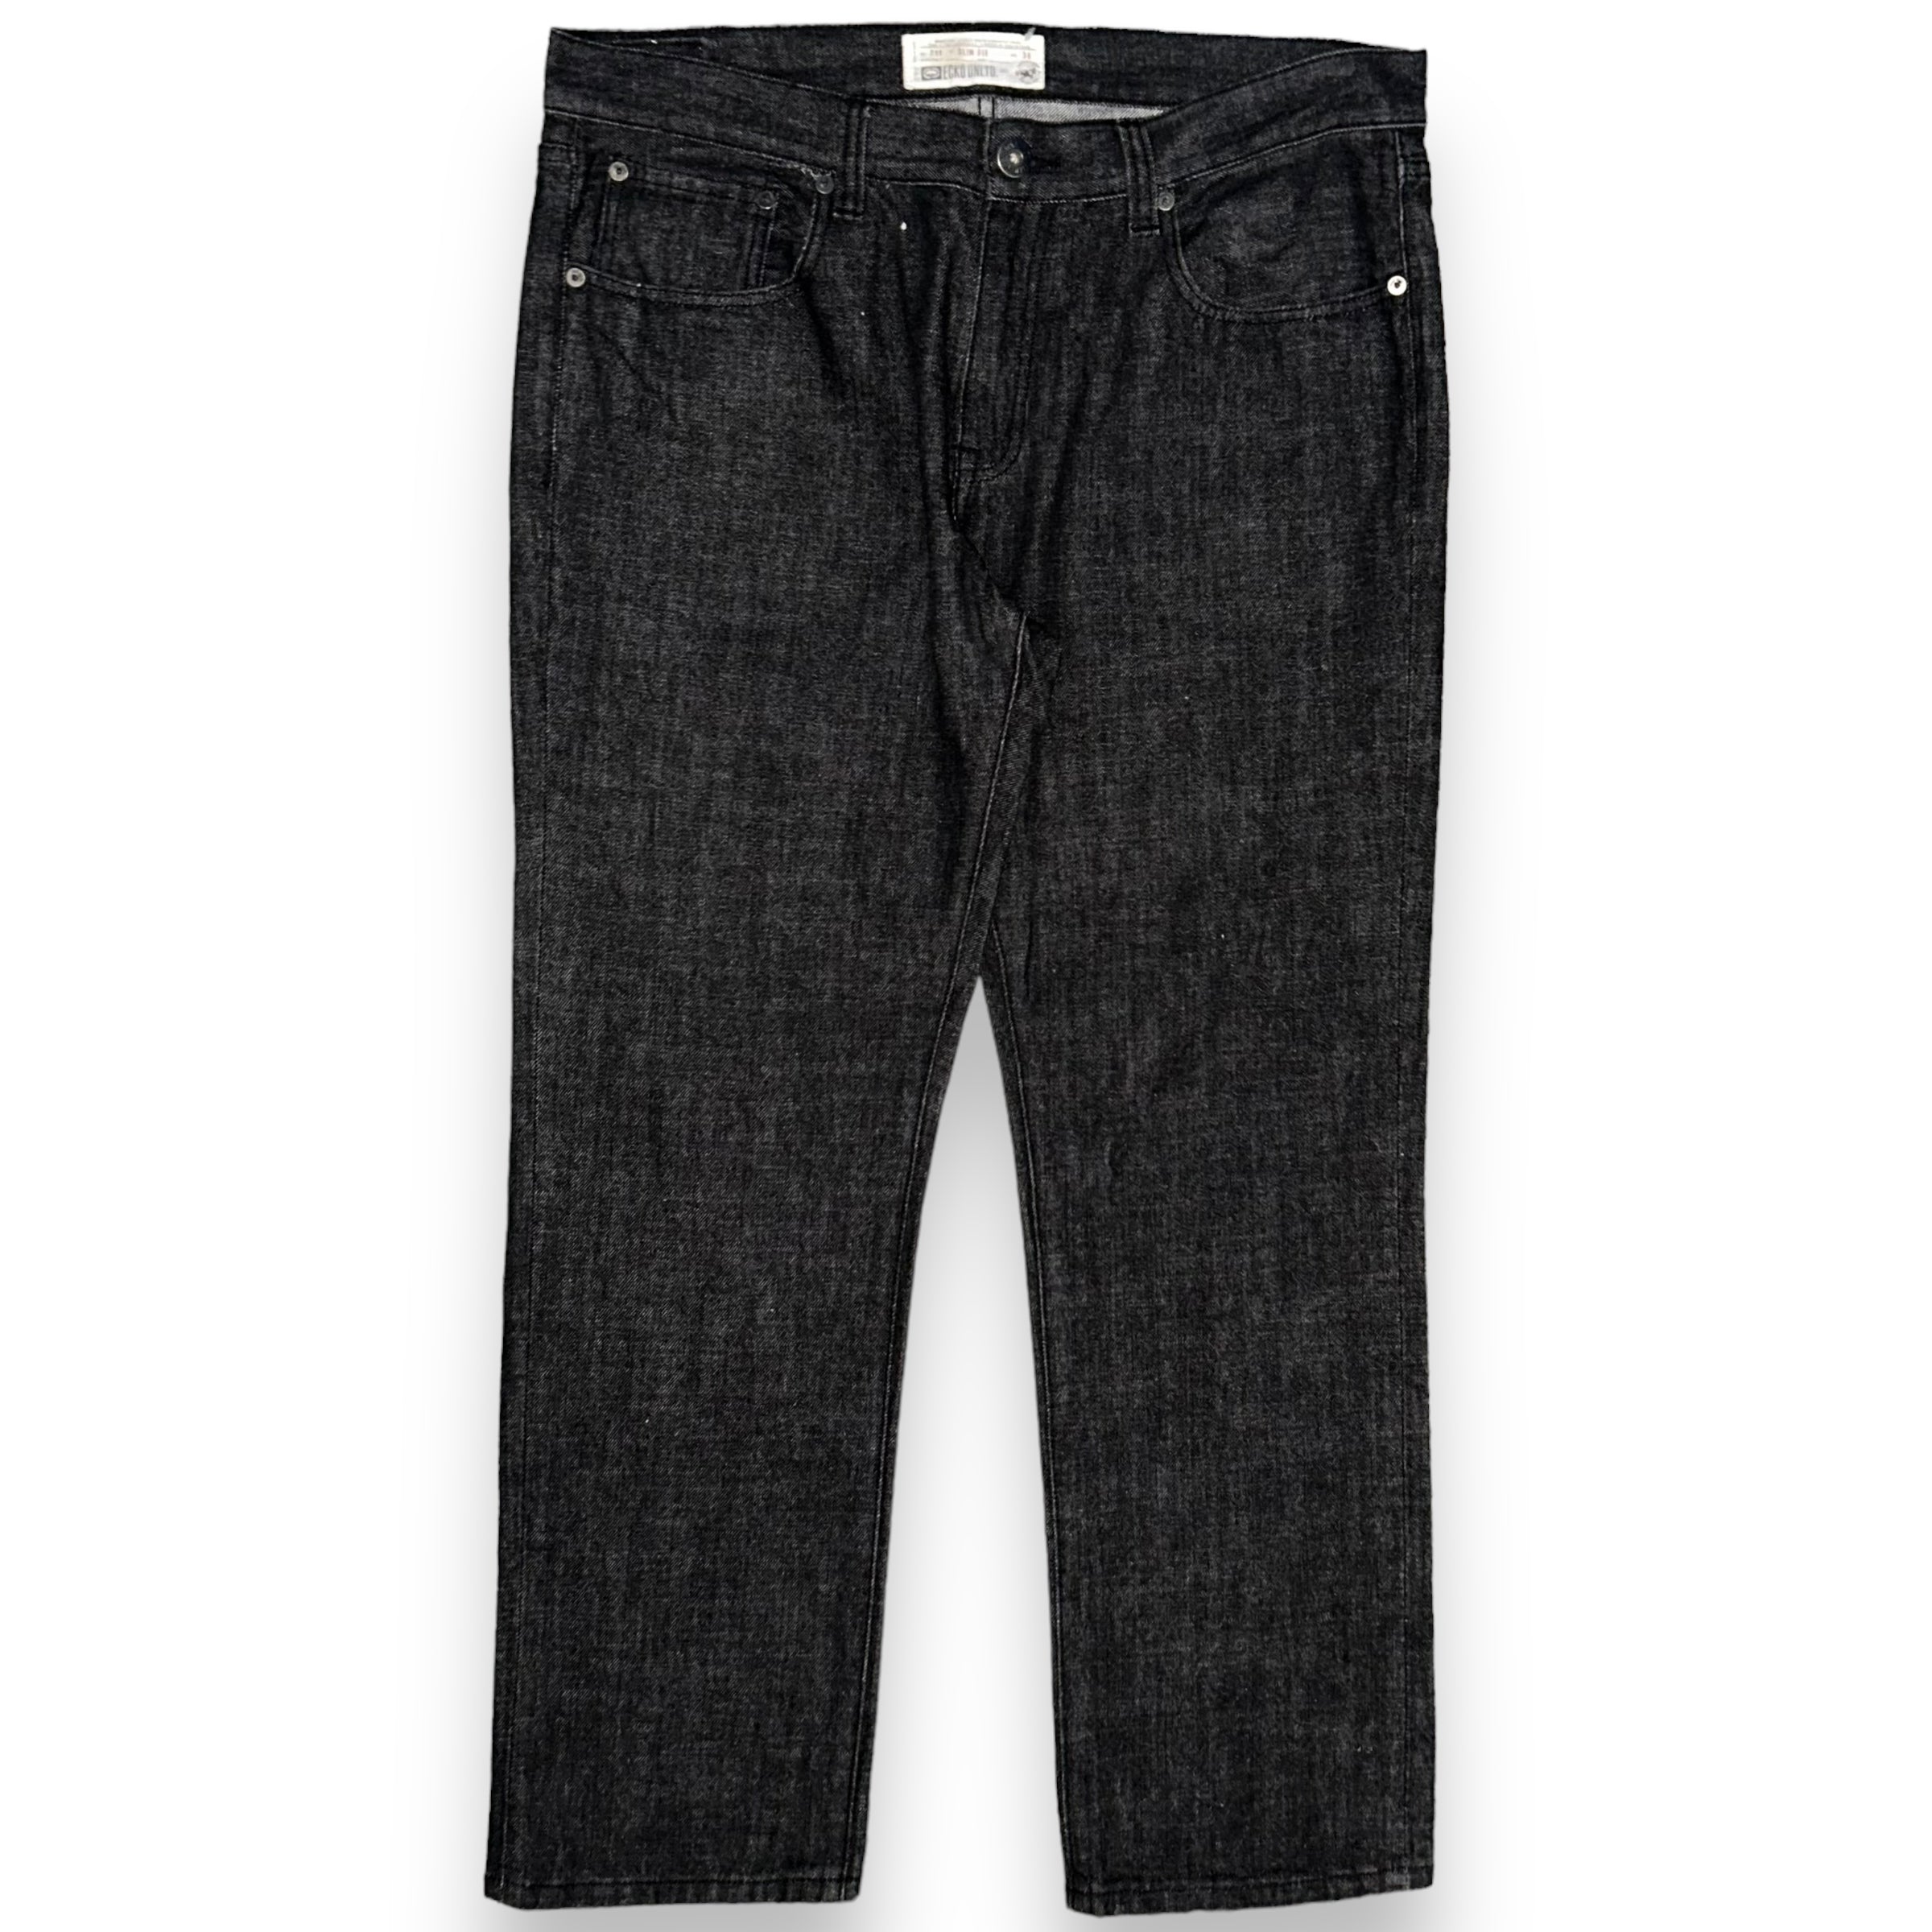 Ecko Unlimited Vintage Jeans (36 US XL)